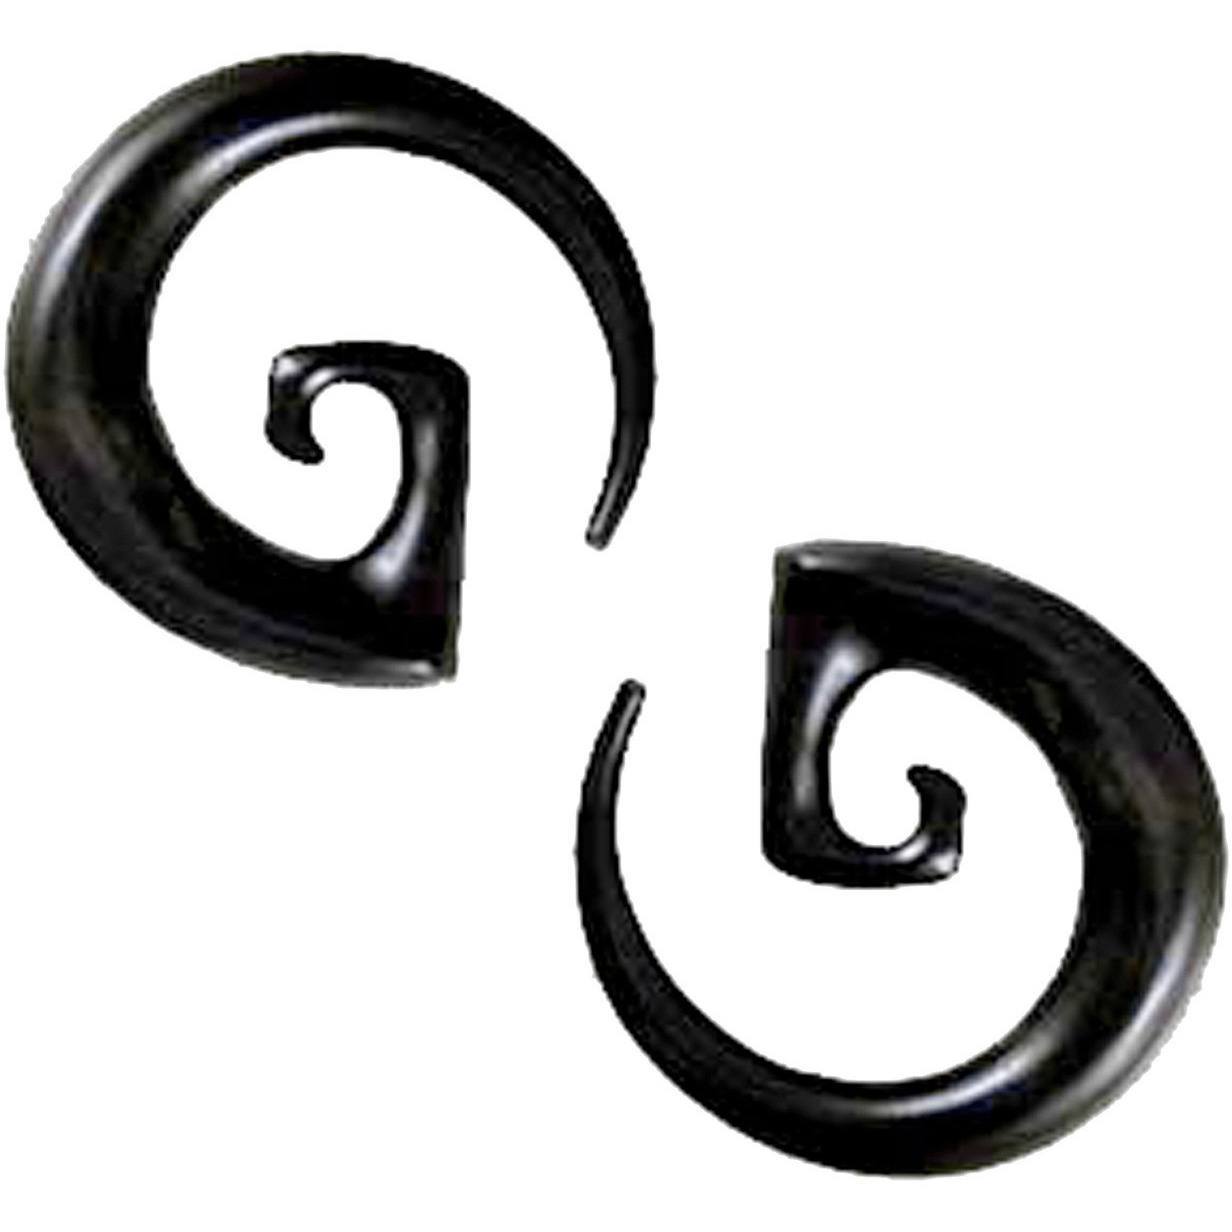 Gauged Earrings :|: Water Buffalo Horn Garuda Spirals, 00 gauge | Spiral Body Jewelry